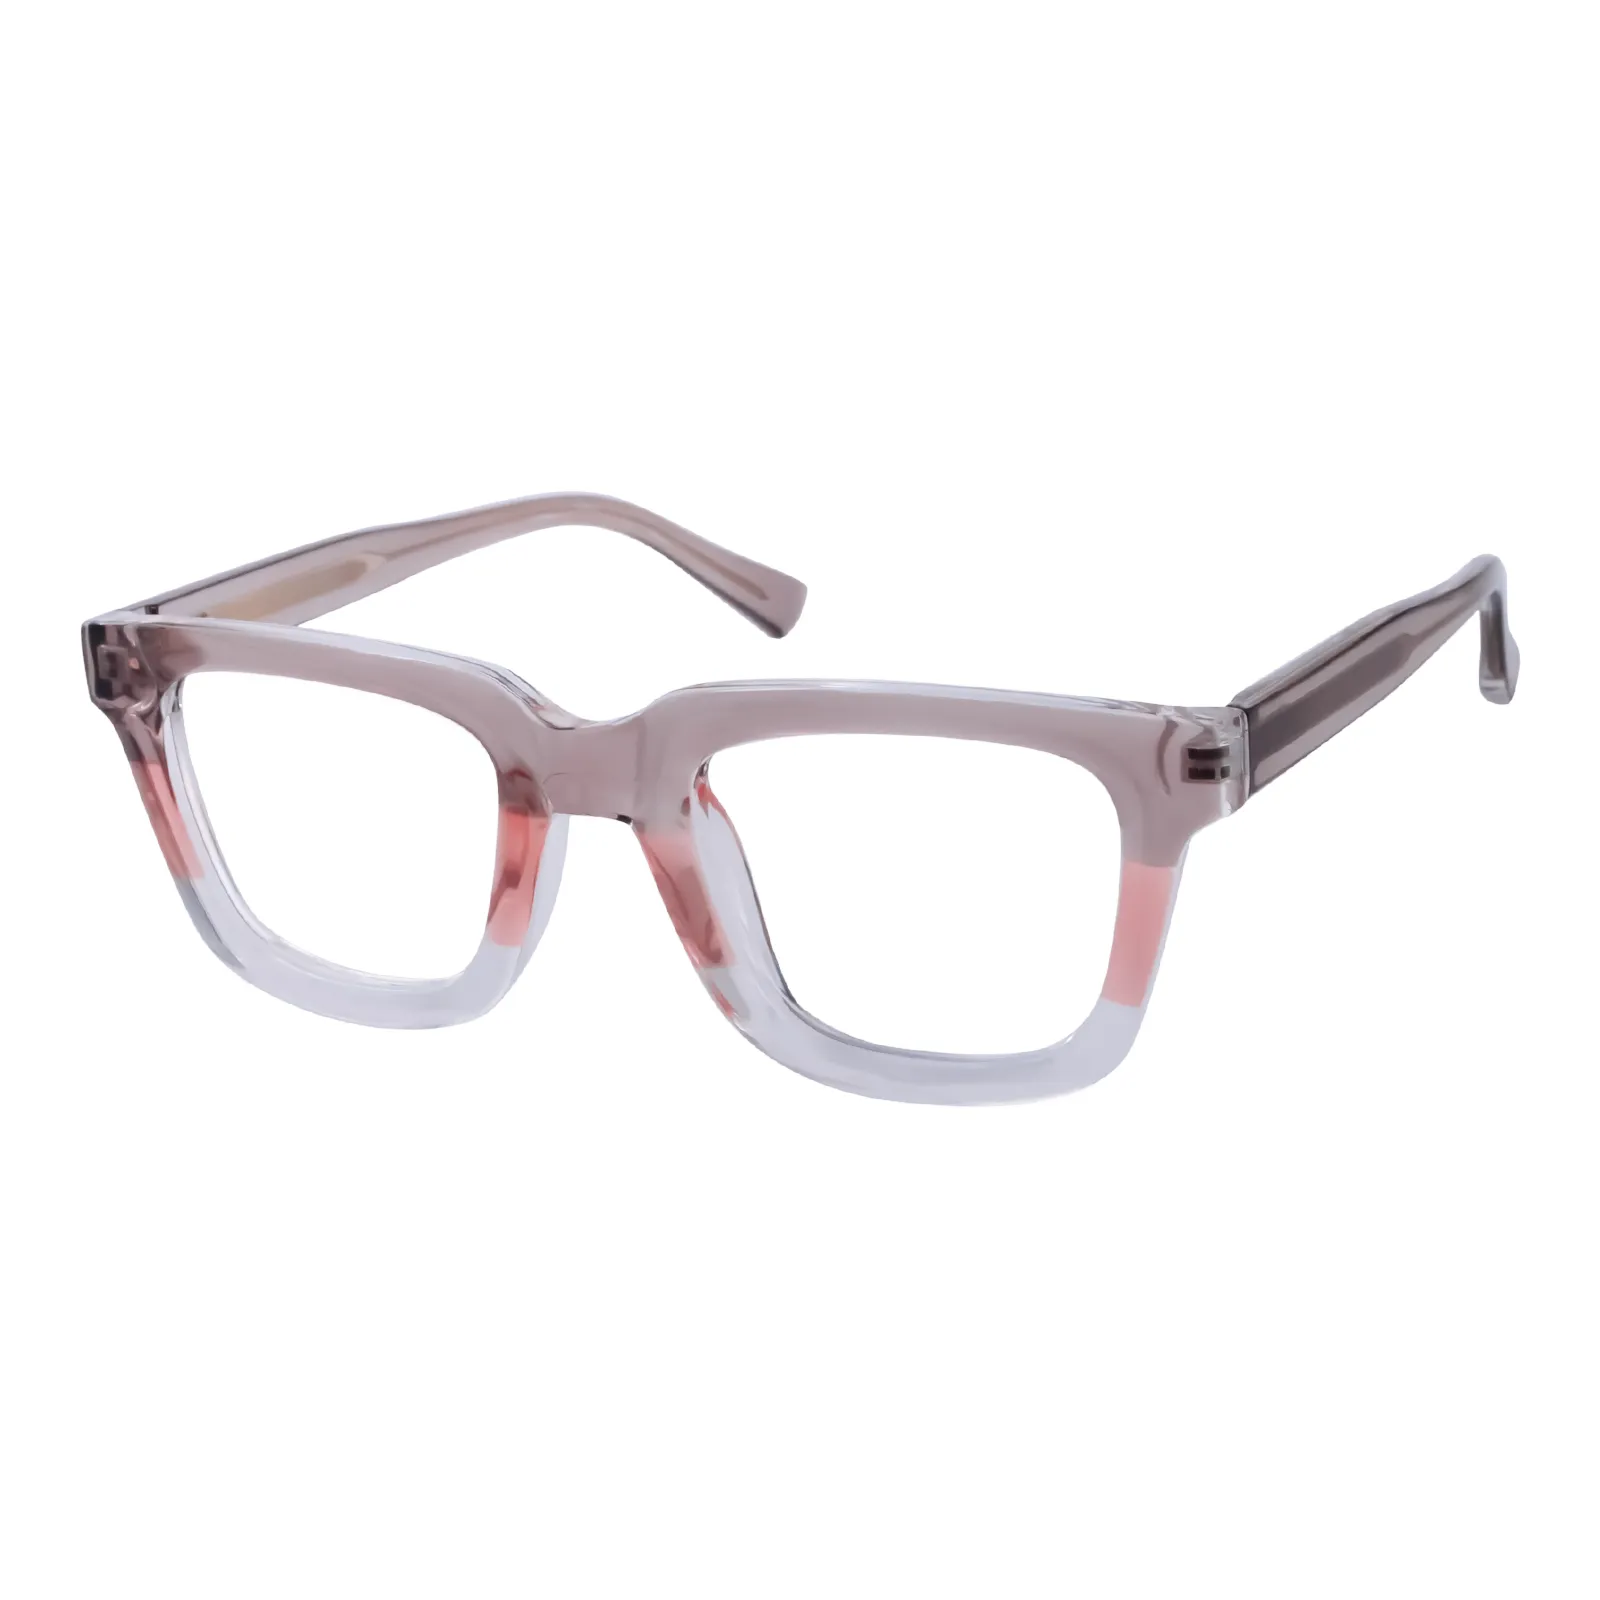 Asa - Square Brown-transparent Glasses for Women